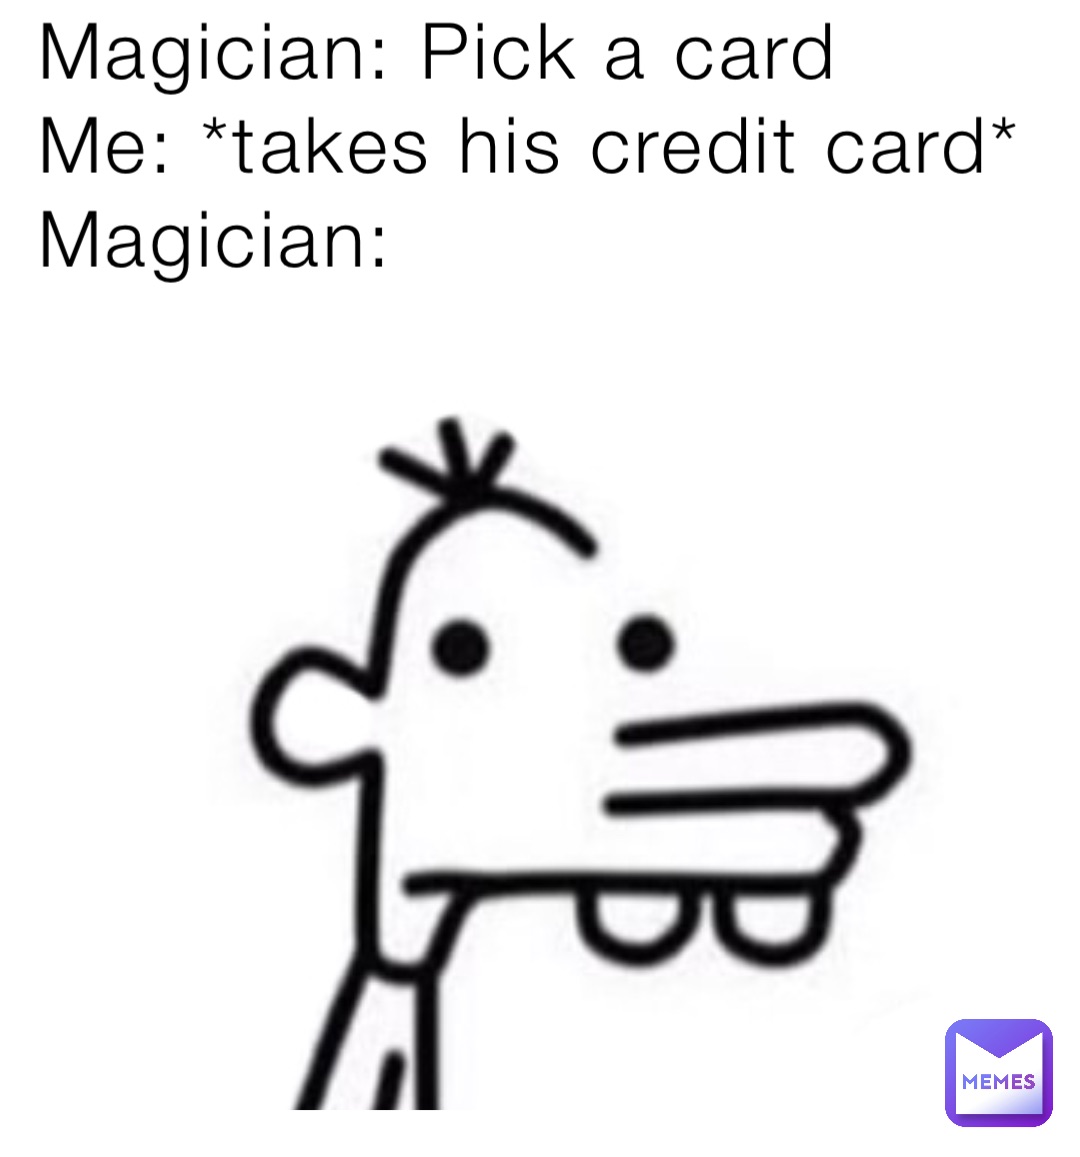 Magician: Pick a card
Me: *takes his credit card*
Magician: